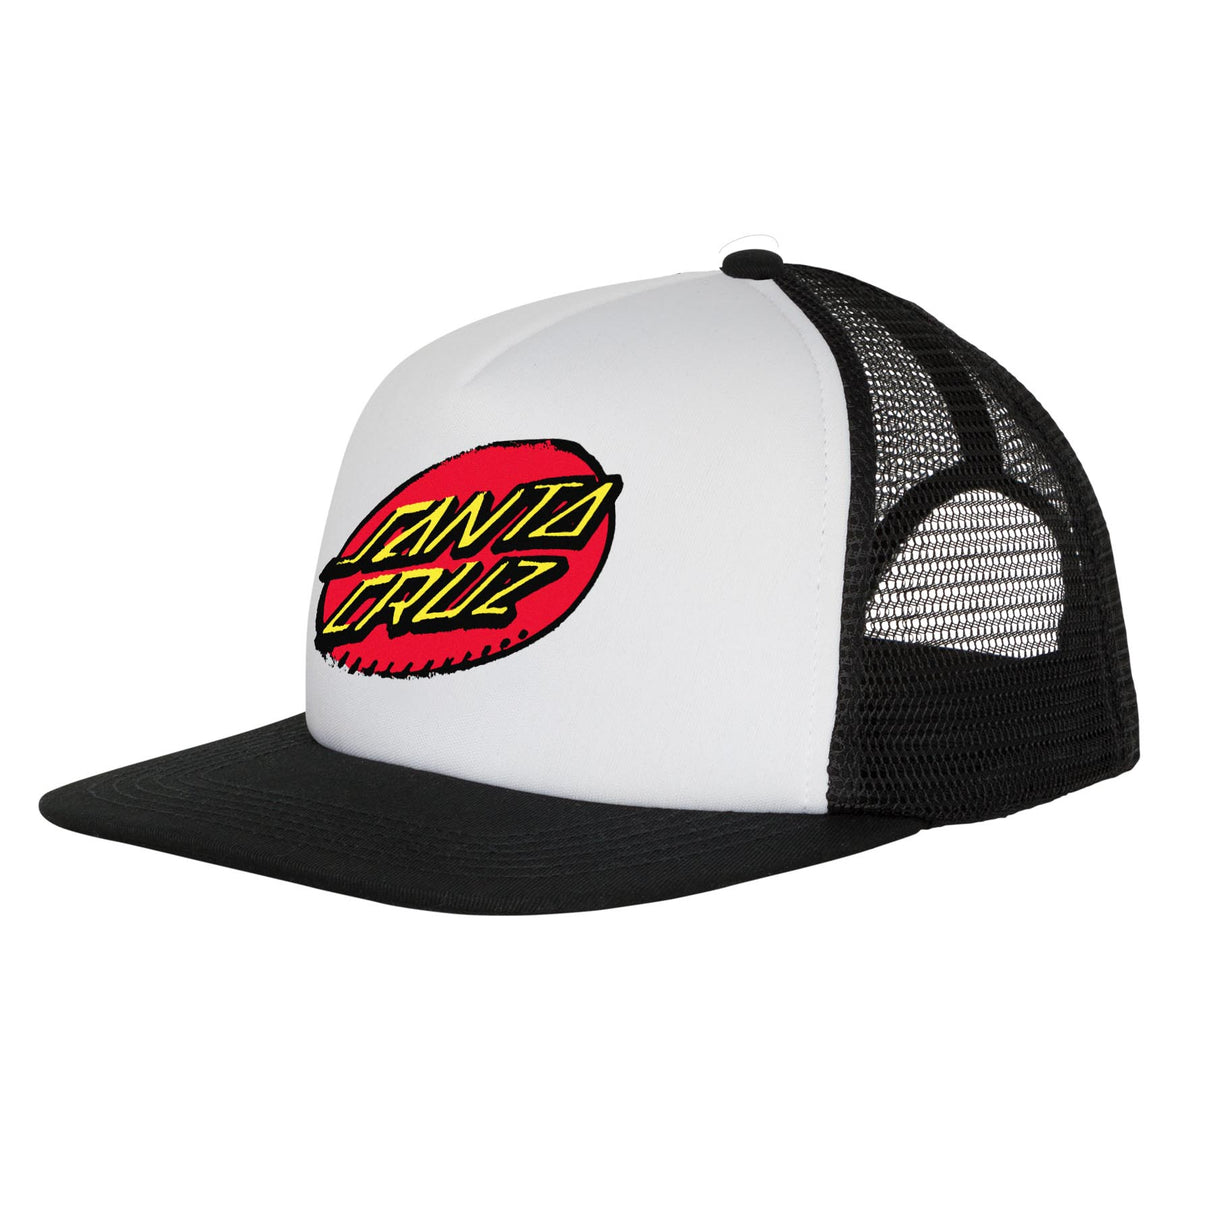 Santa Cruz Creep Dot Mesh Black White Trucker Snapback Hat